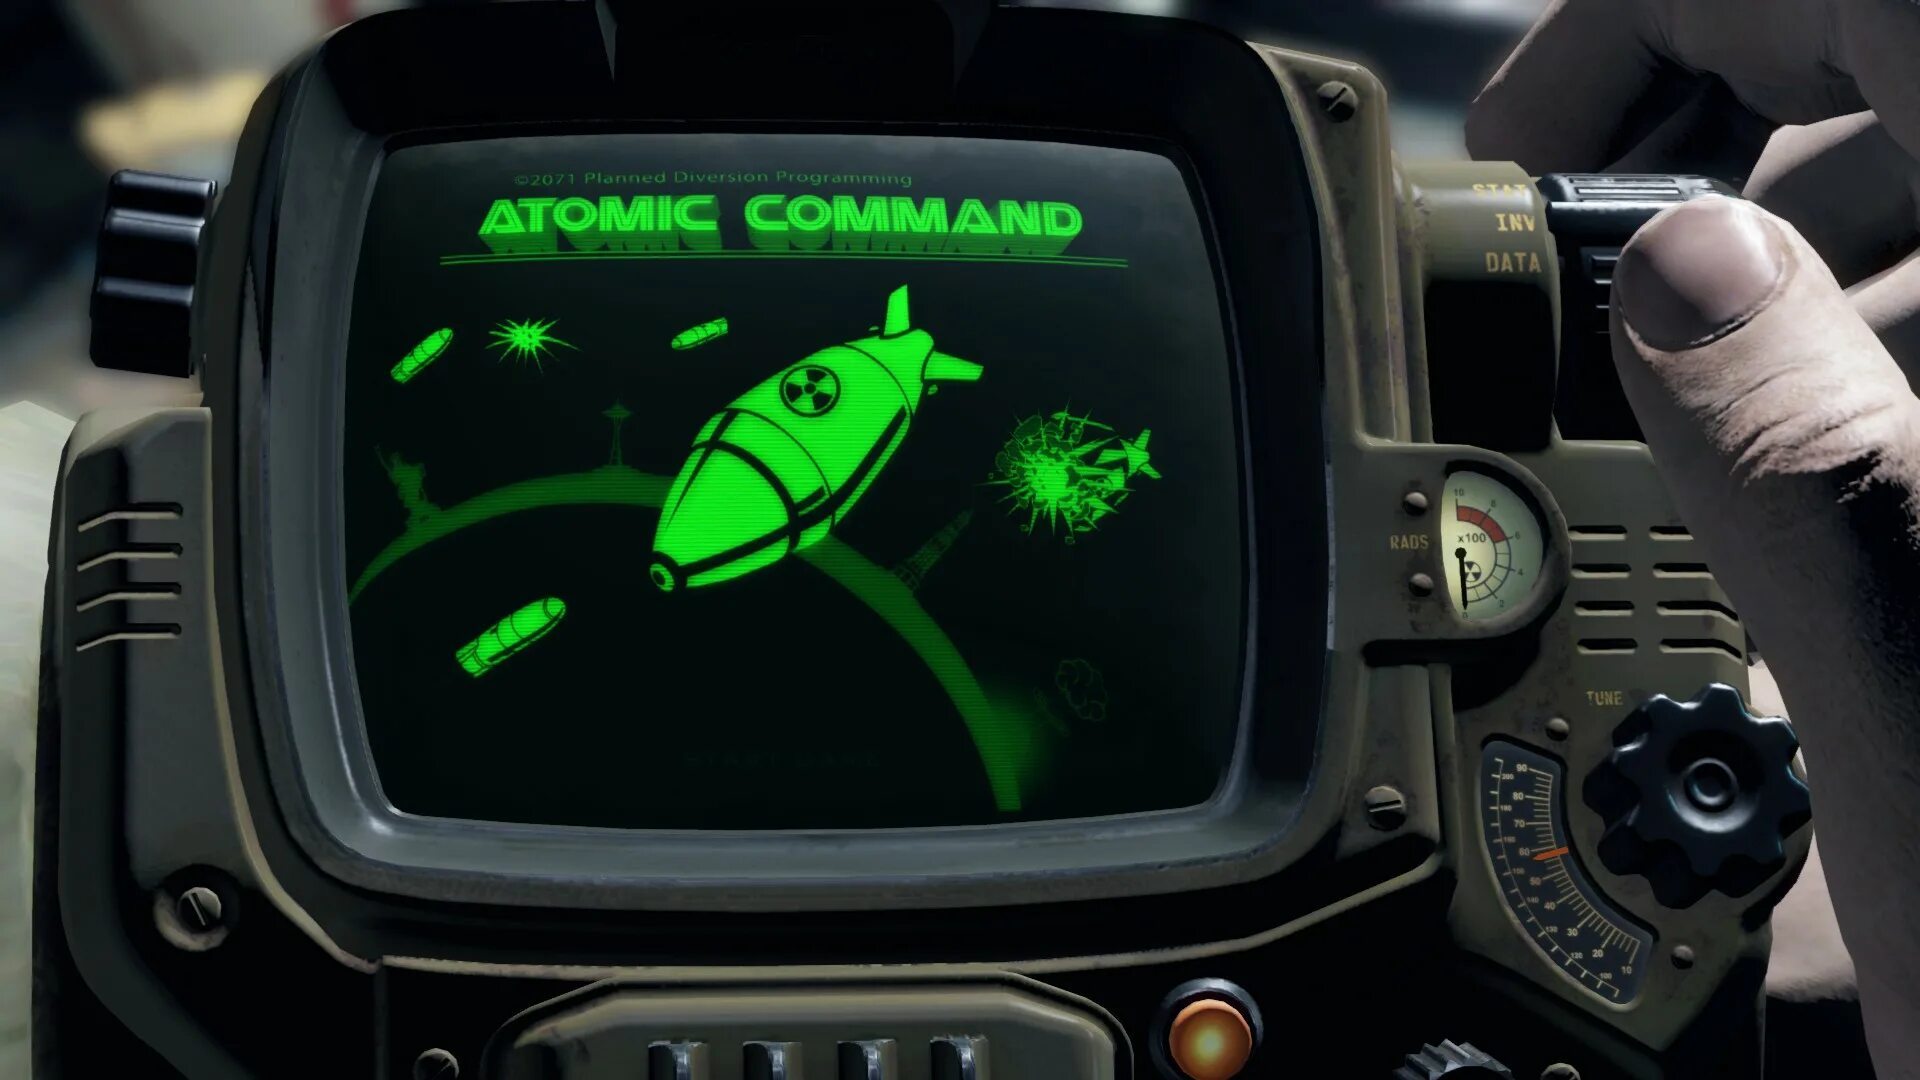 Atomic Command Fallout 4. Fallout 4 Pip boy. Приборы фоллаут. Pipboy казино.